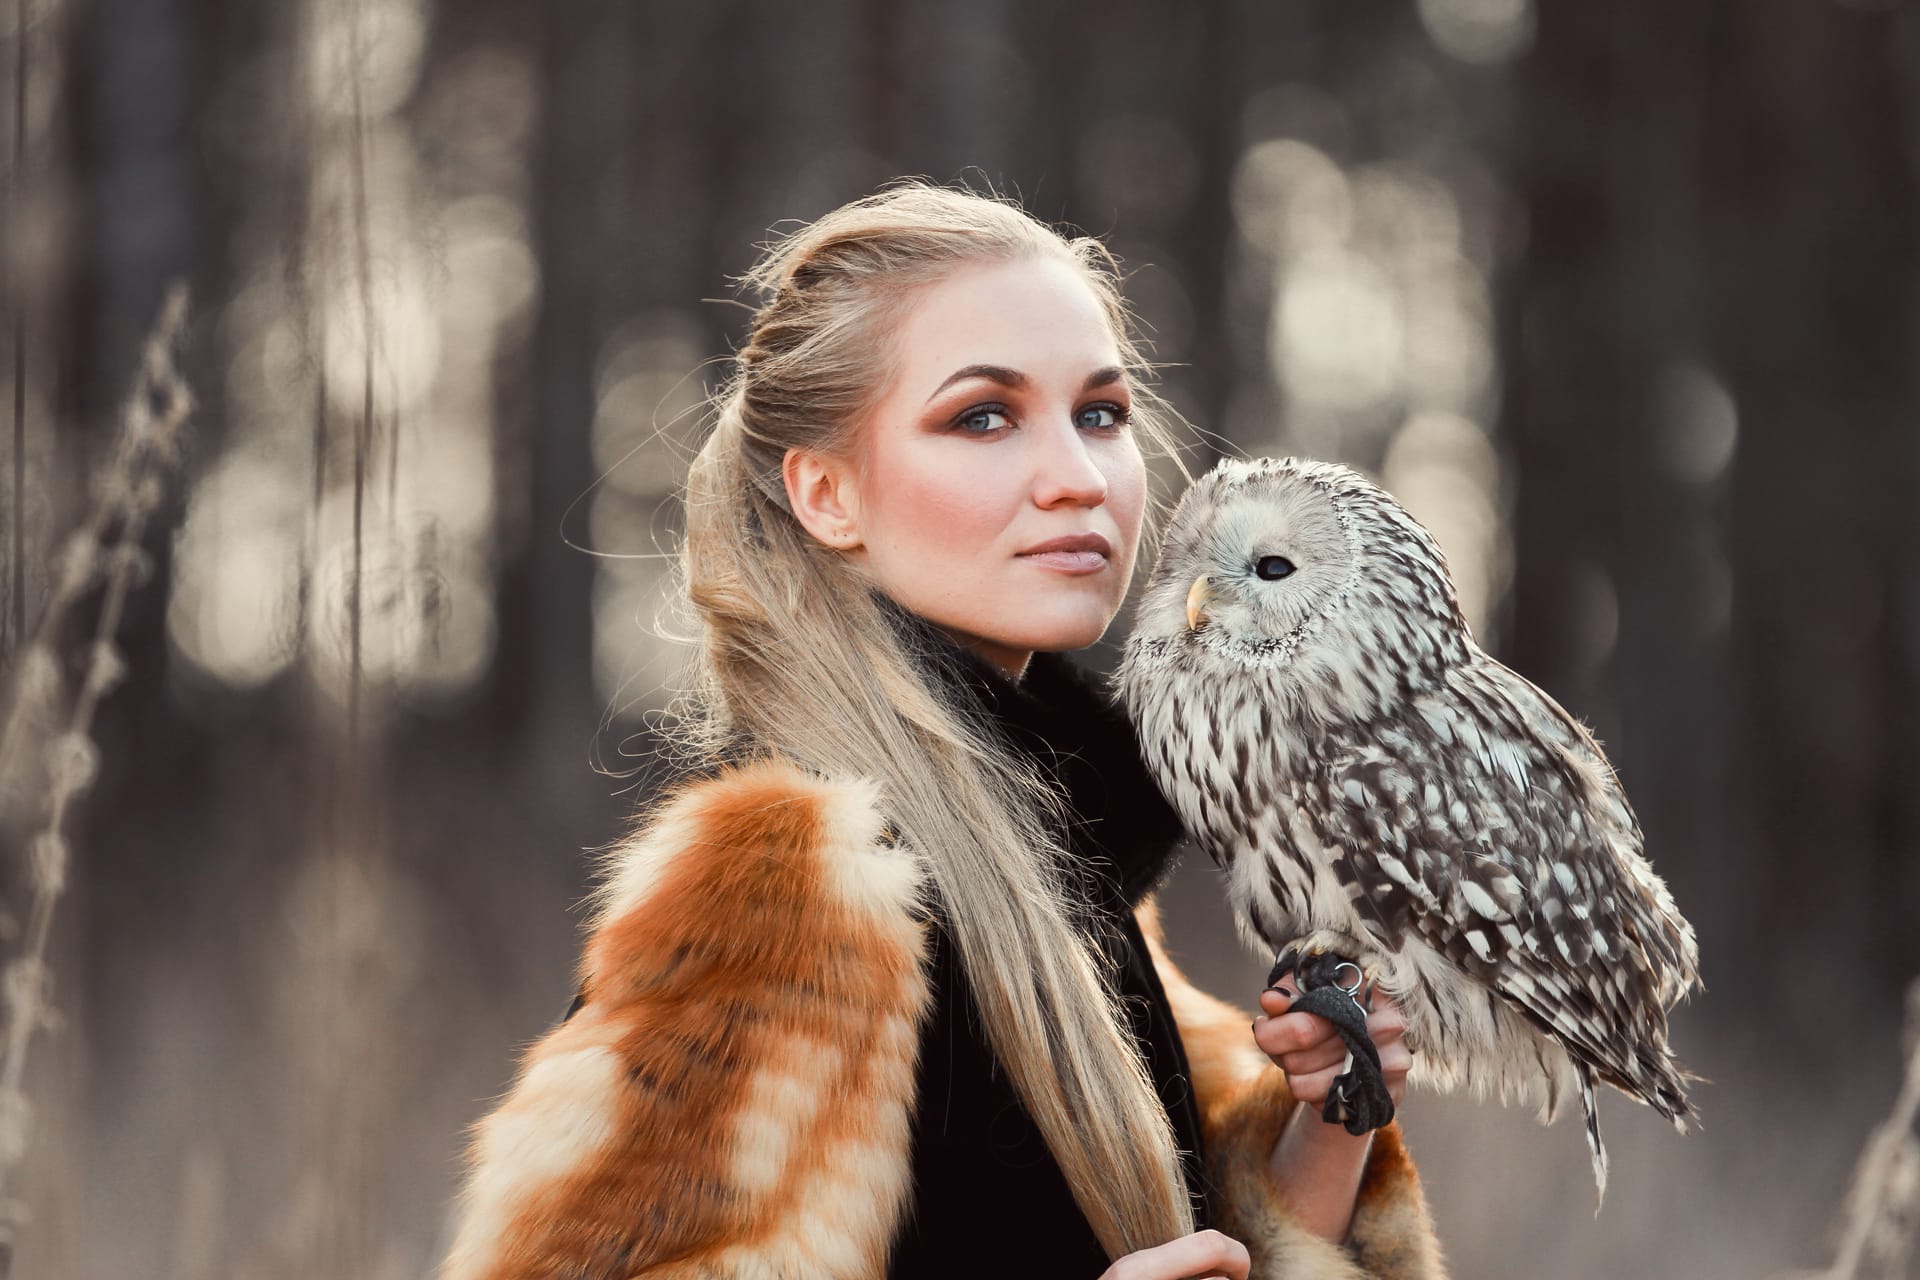 Spring long hair girl romantic portrait with owl art fashion photo beautiful makeup